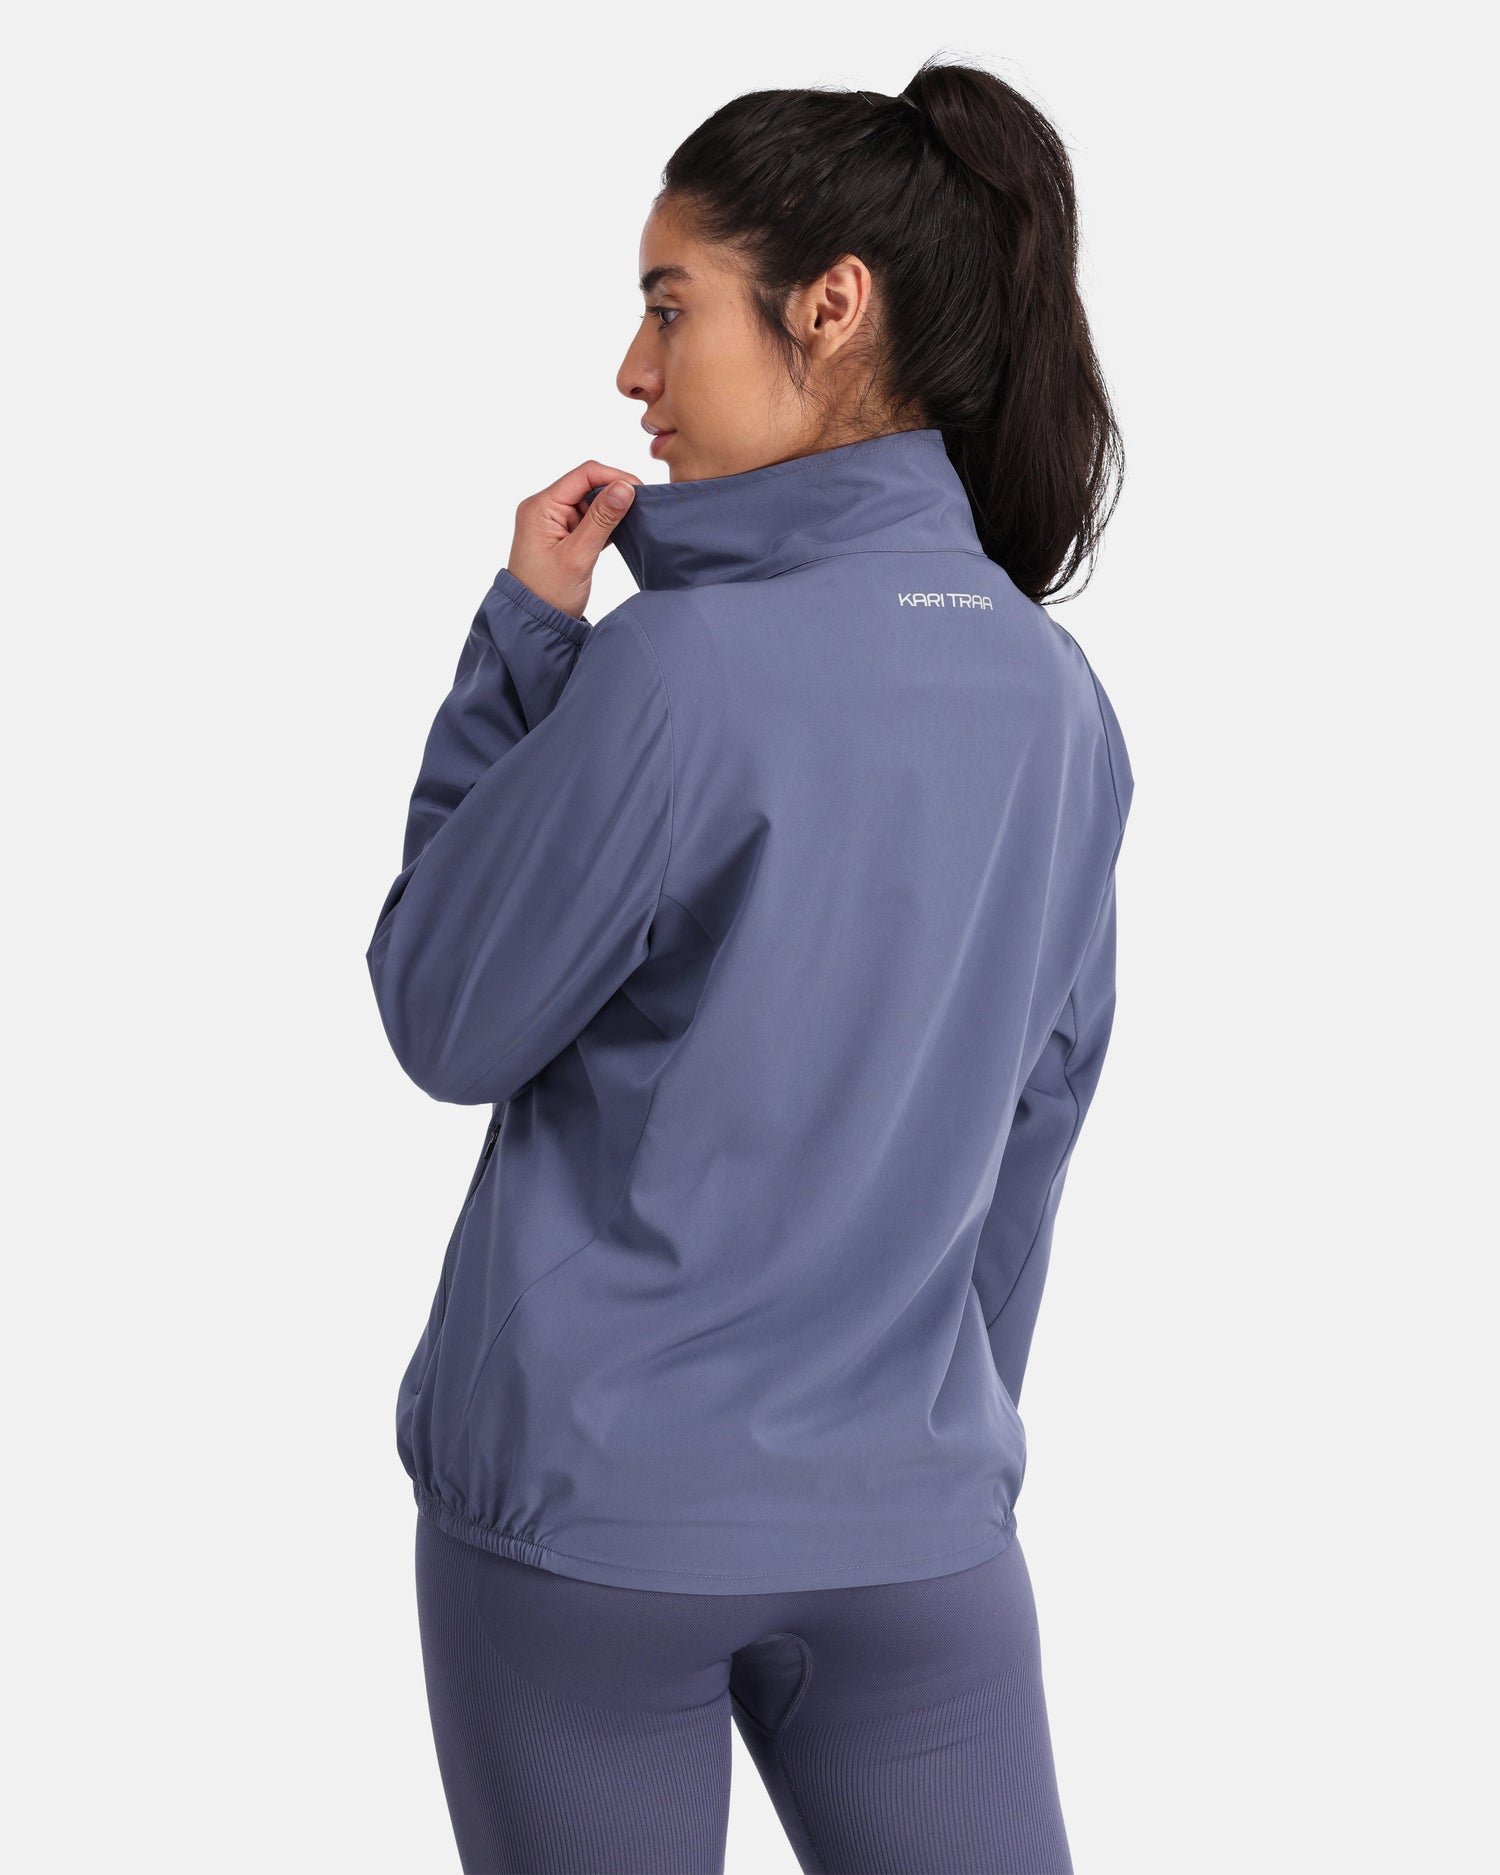 Kari Traa - W's Nora 2.0 Jacket - Recycled Polyester - Weekendbee - sustainable sportswear